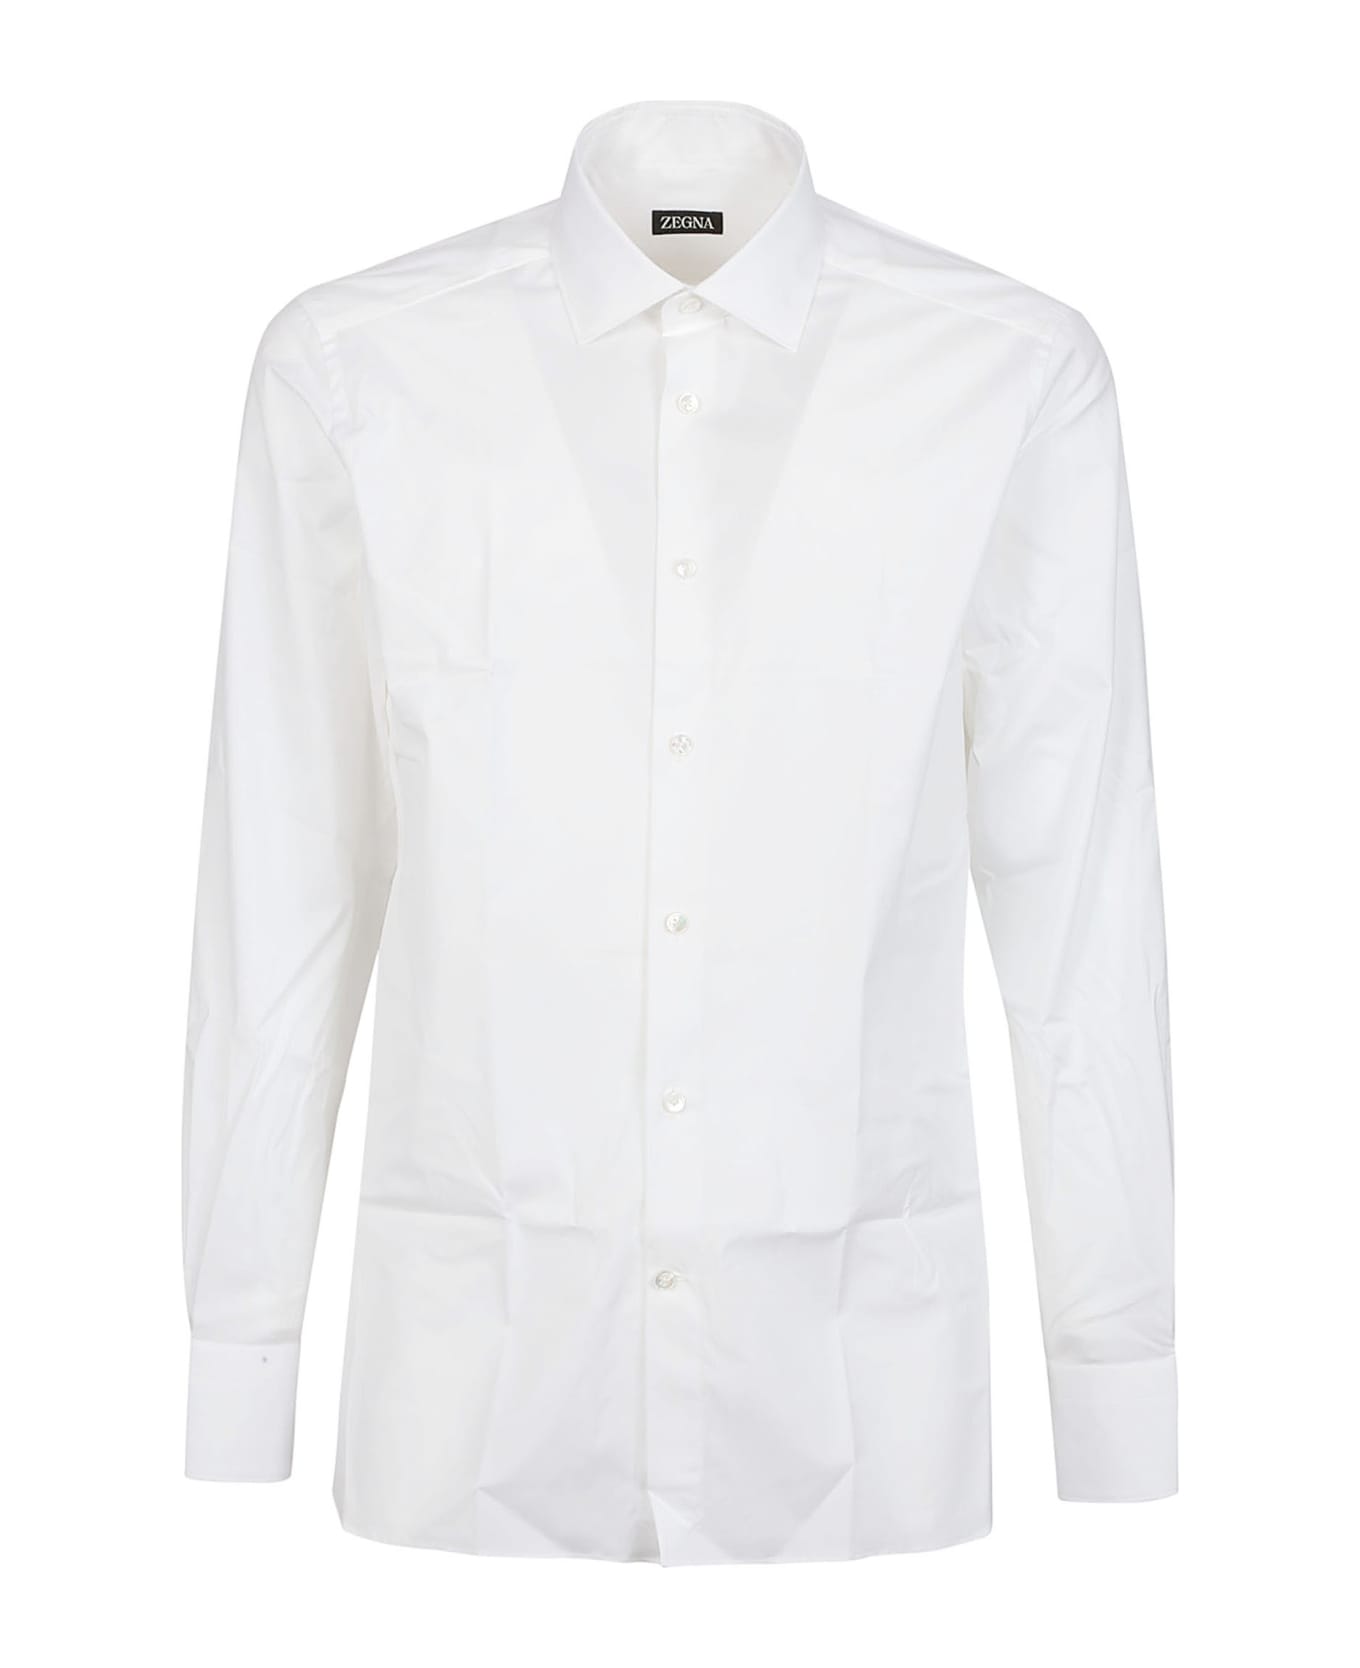 Zegna Lux Tailoring Long Sleeve Shirt - Bianco